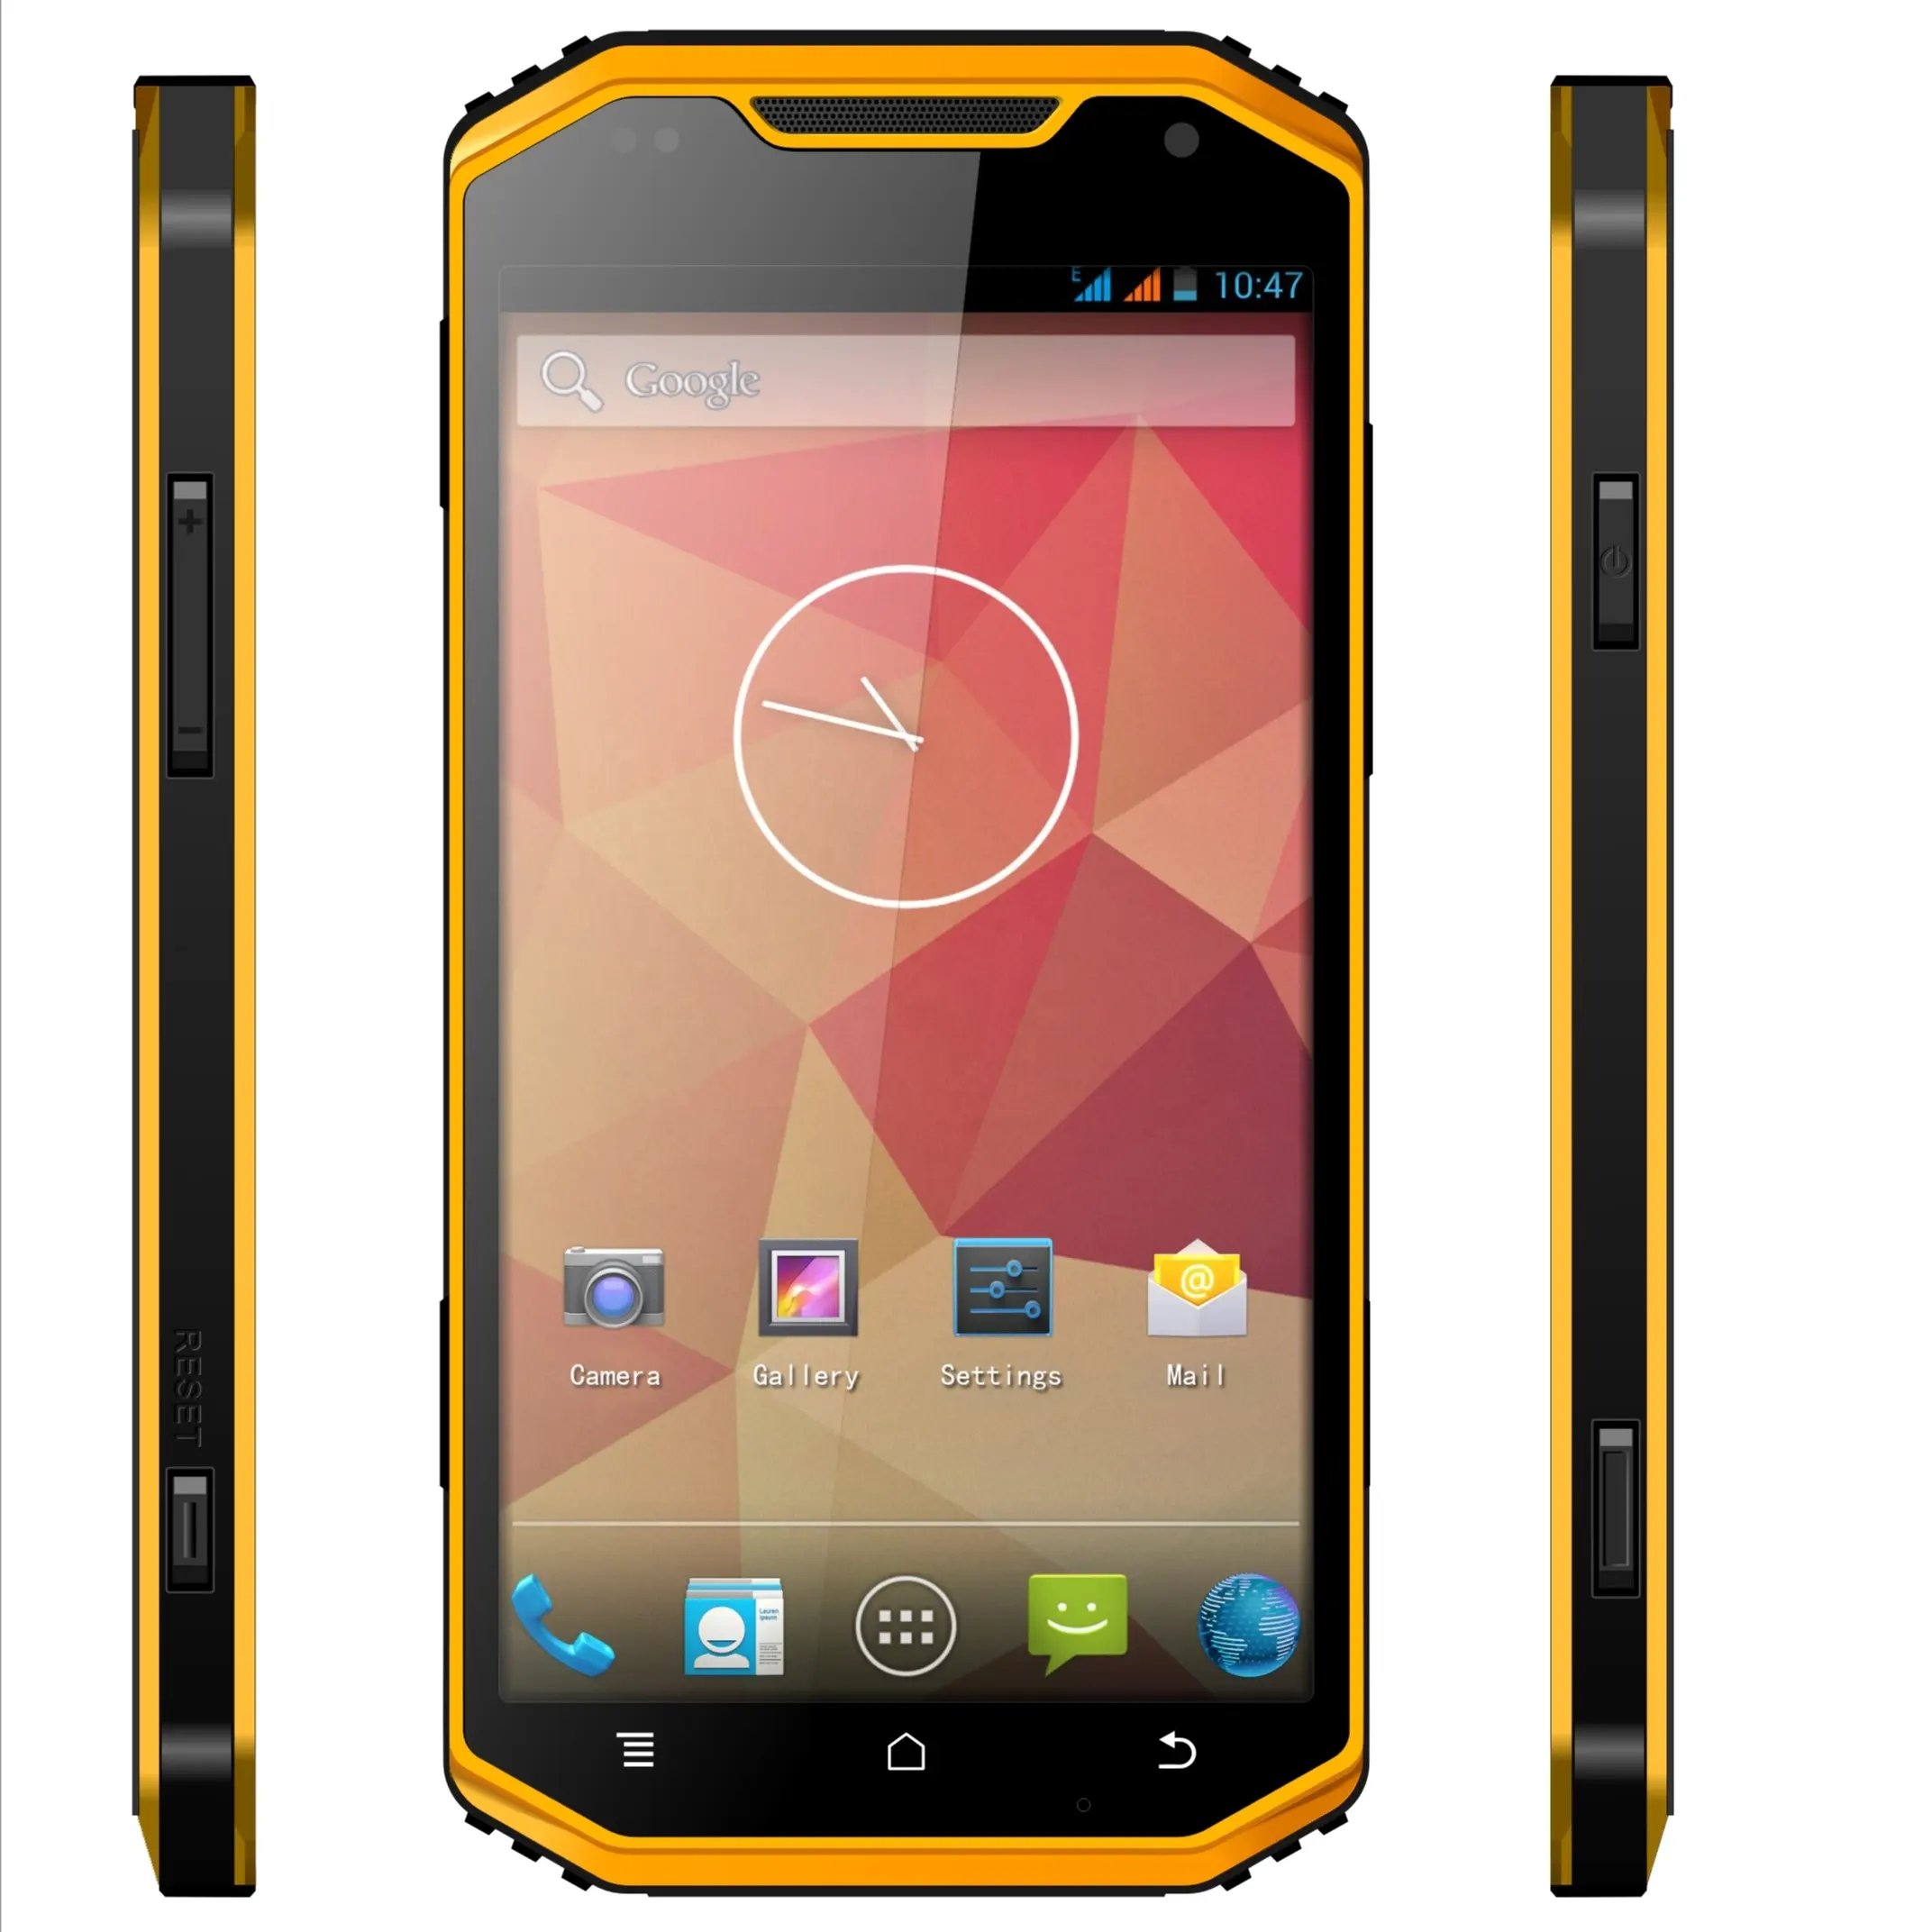 H20จุ่ม Android 4.2 Quad Core IP68เกรดโทรศัพท์มือถือ (Saral S-หมายเหตุ)